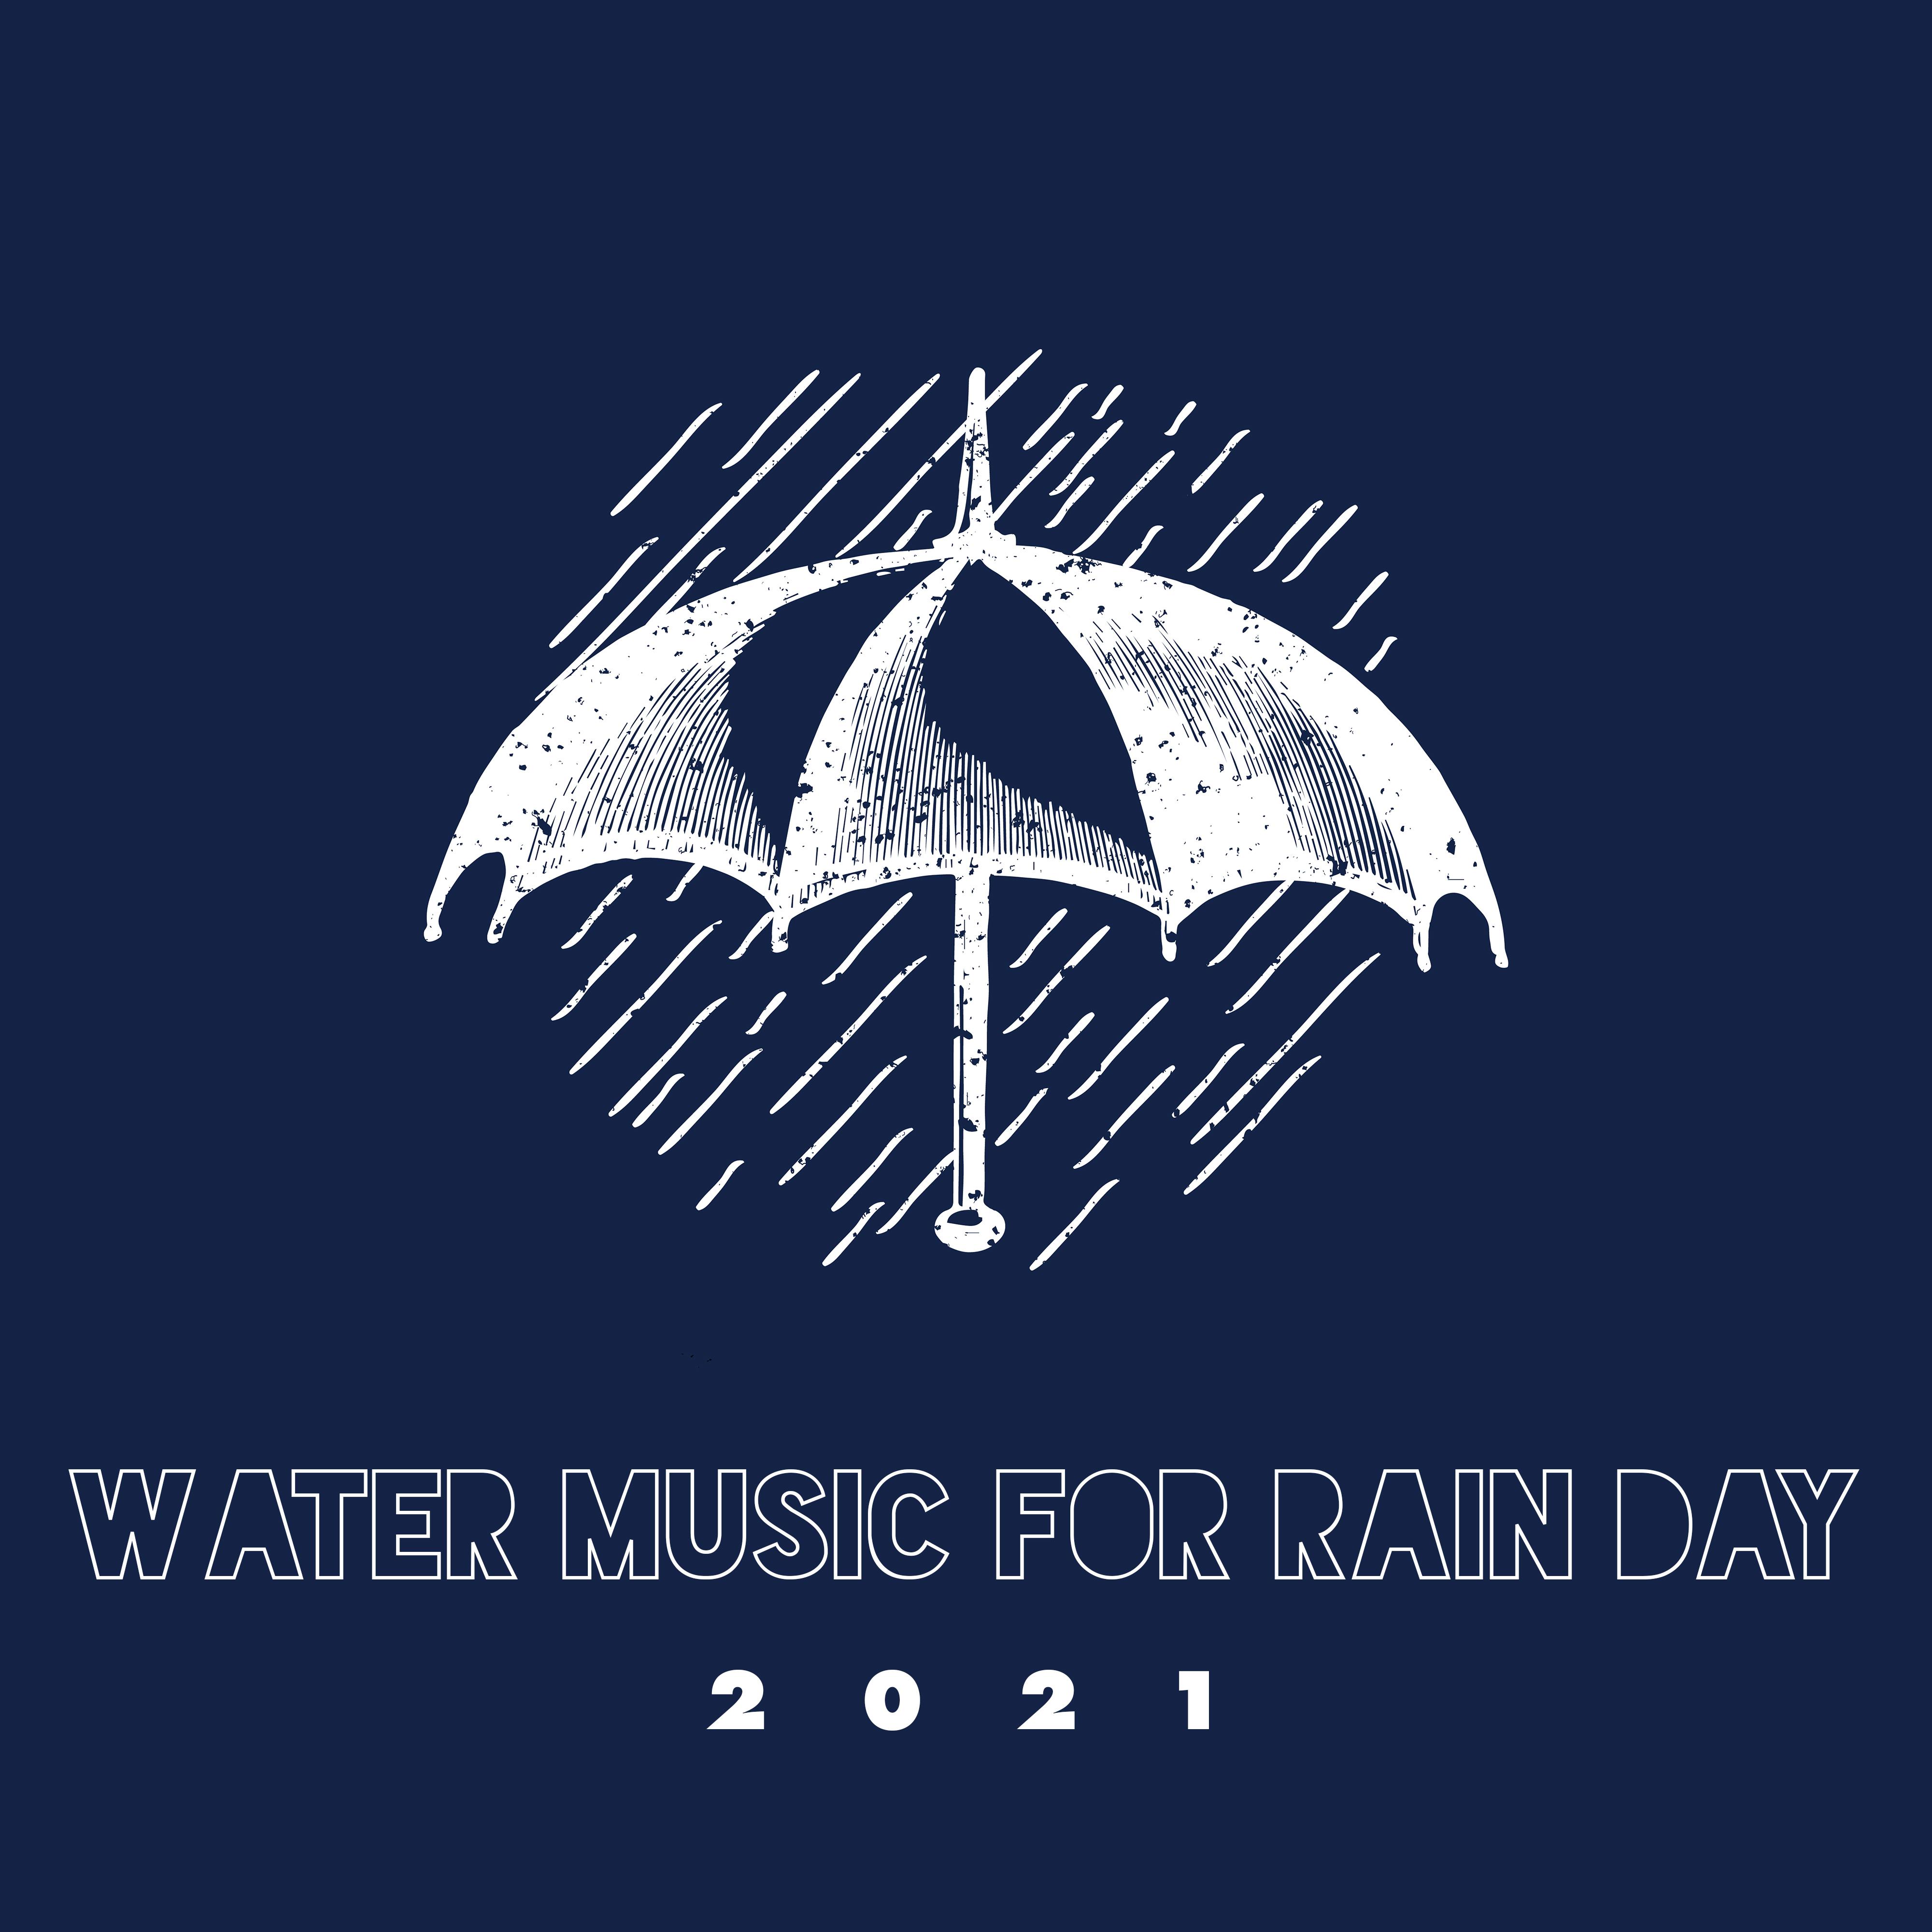 Water Music for Rain Day 2021